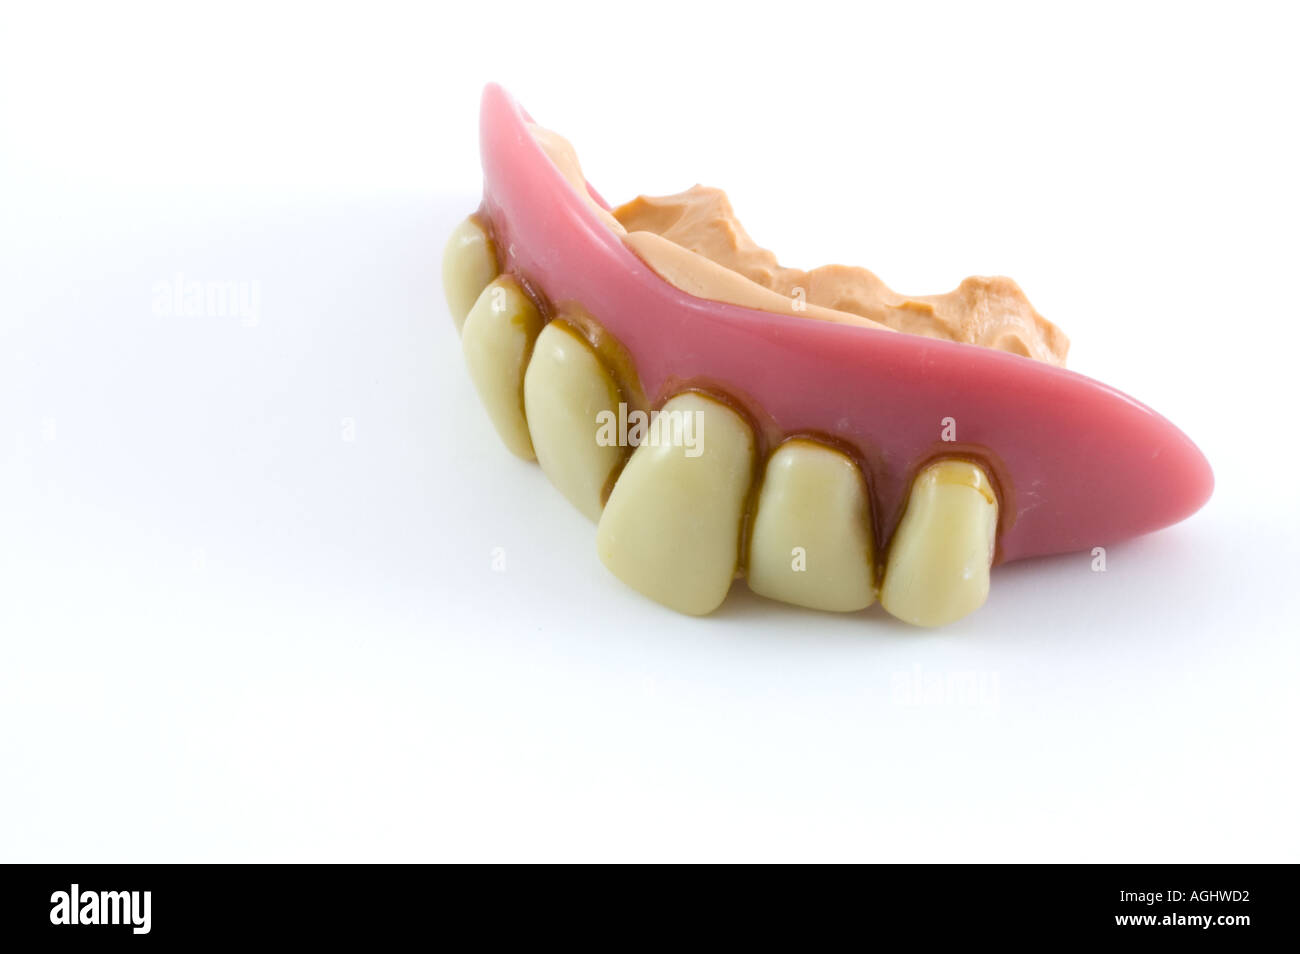 Comedy false teeth against a white background Stock Photo - Alamy